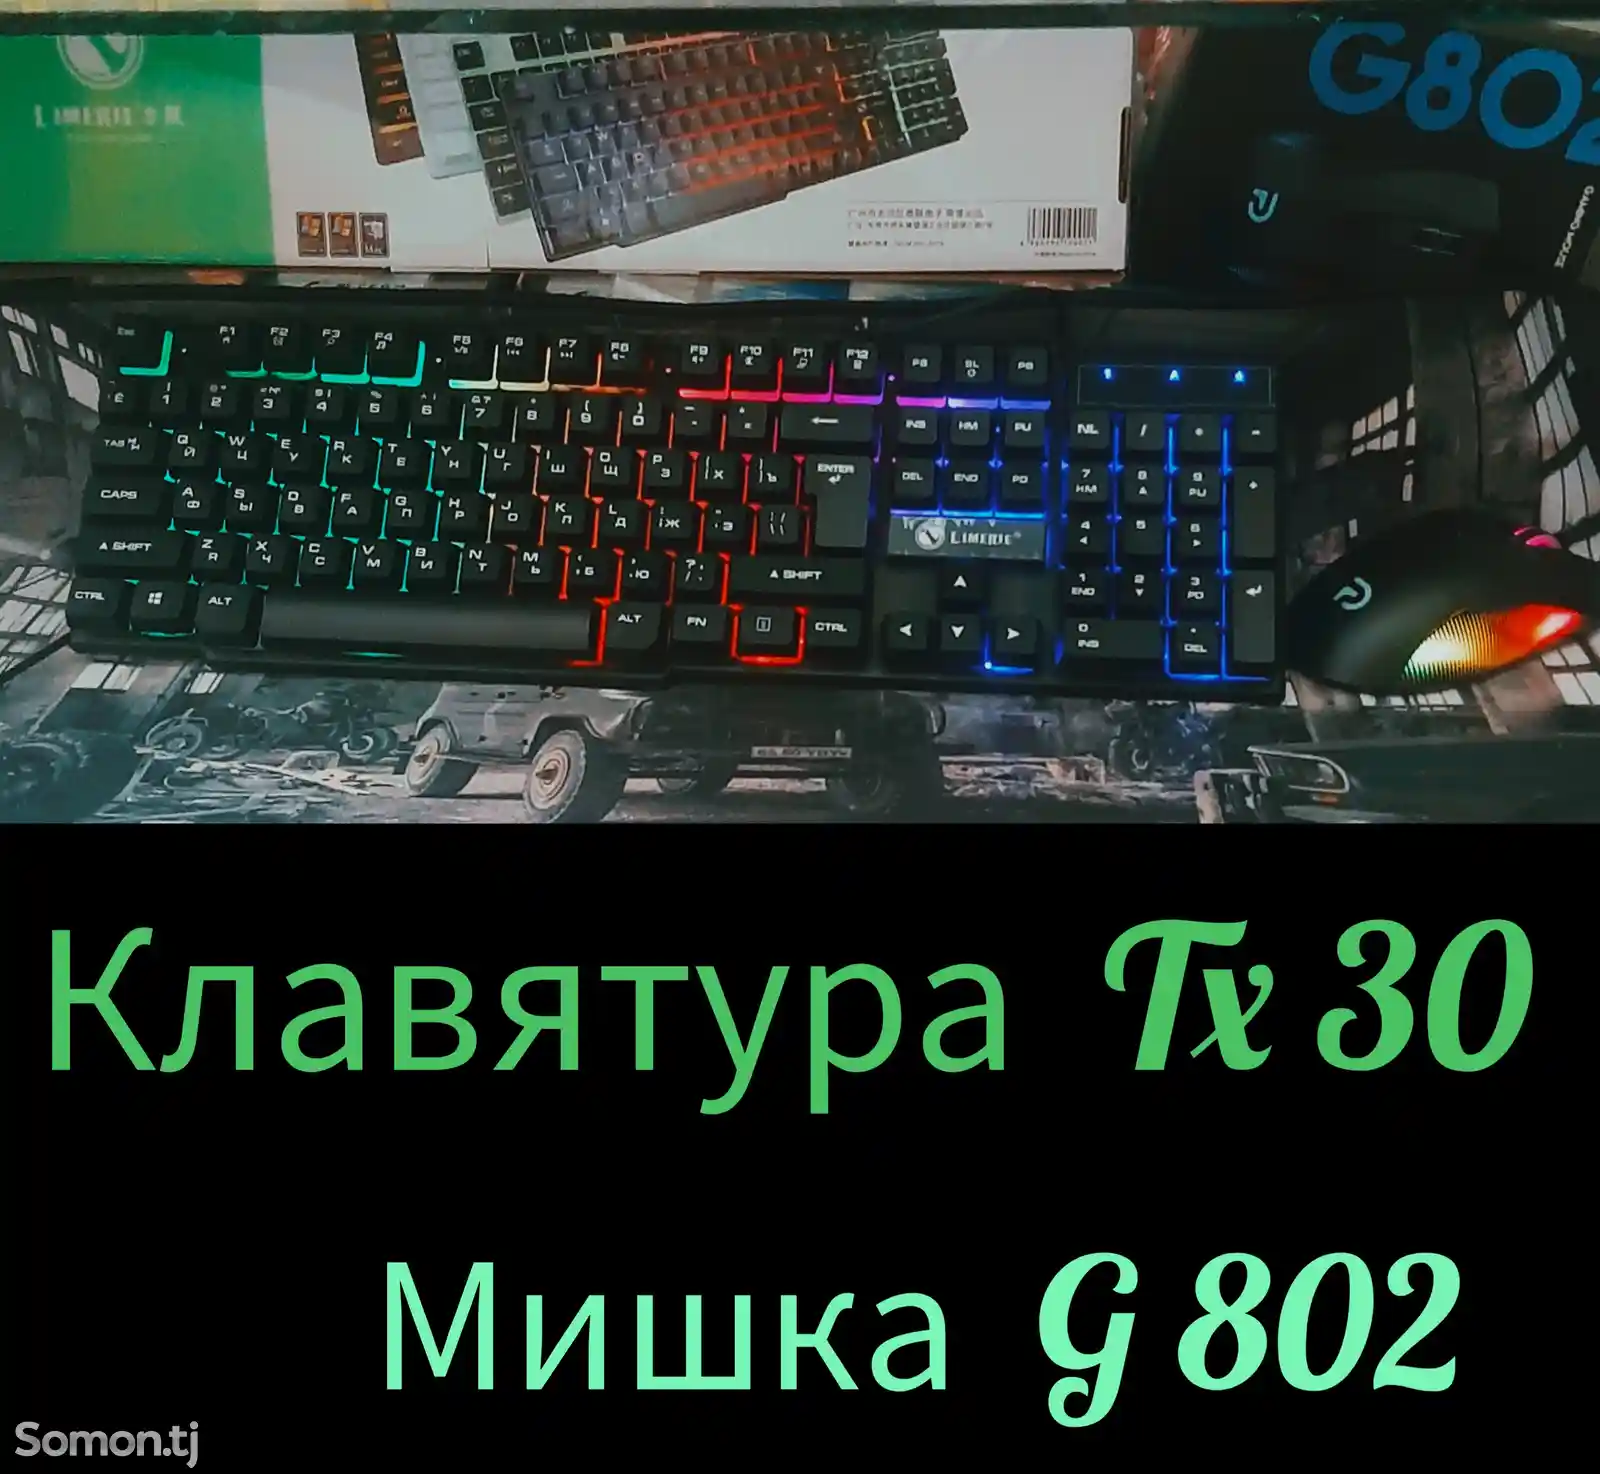 Клавиатура TX 30 и мышка G802 хамелеон Комплект